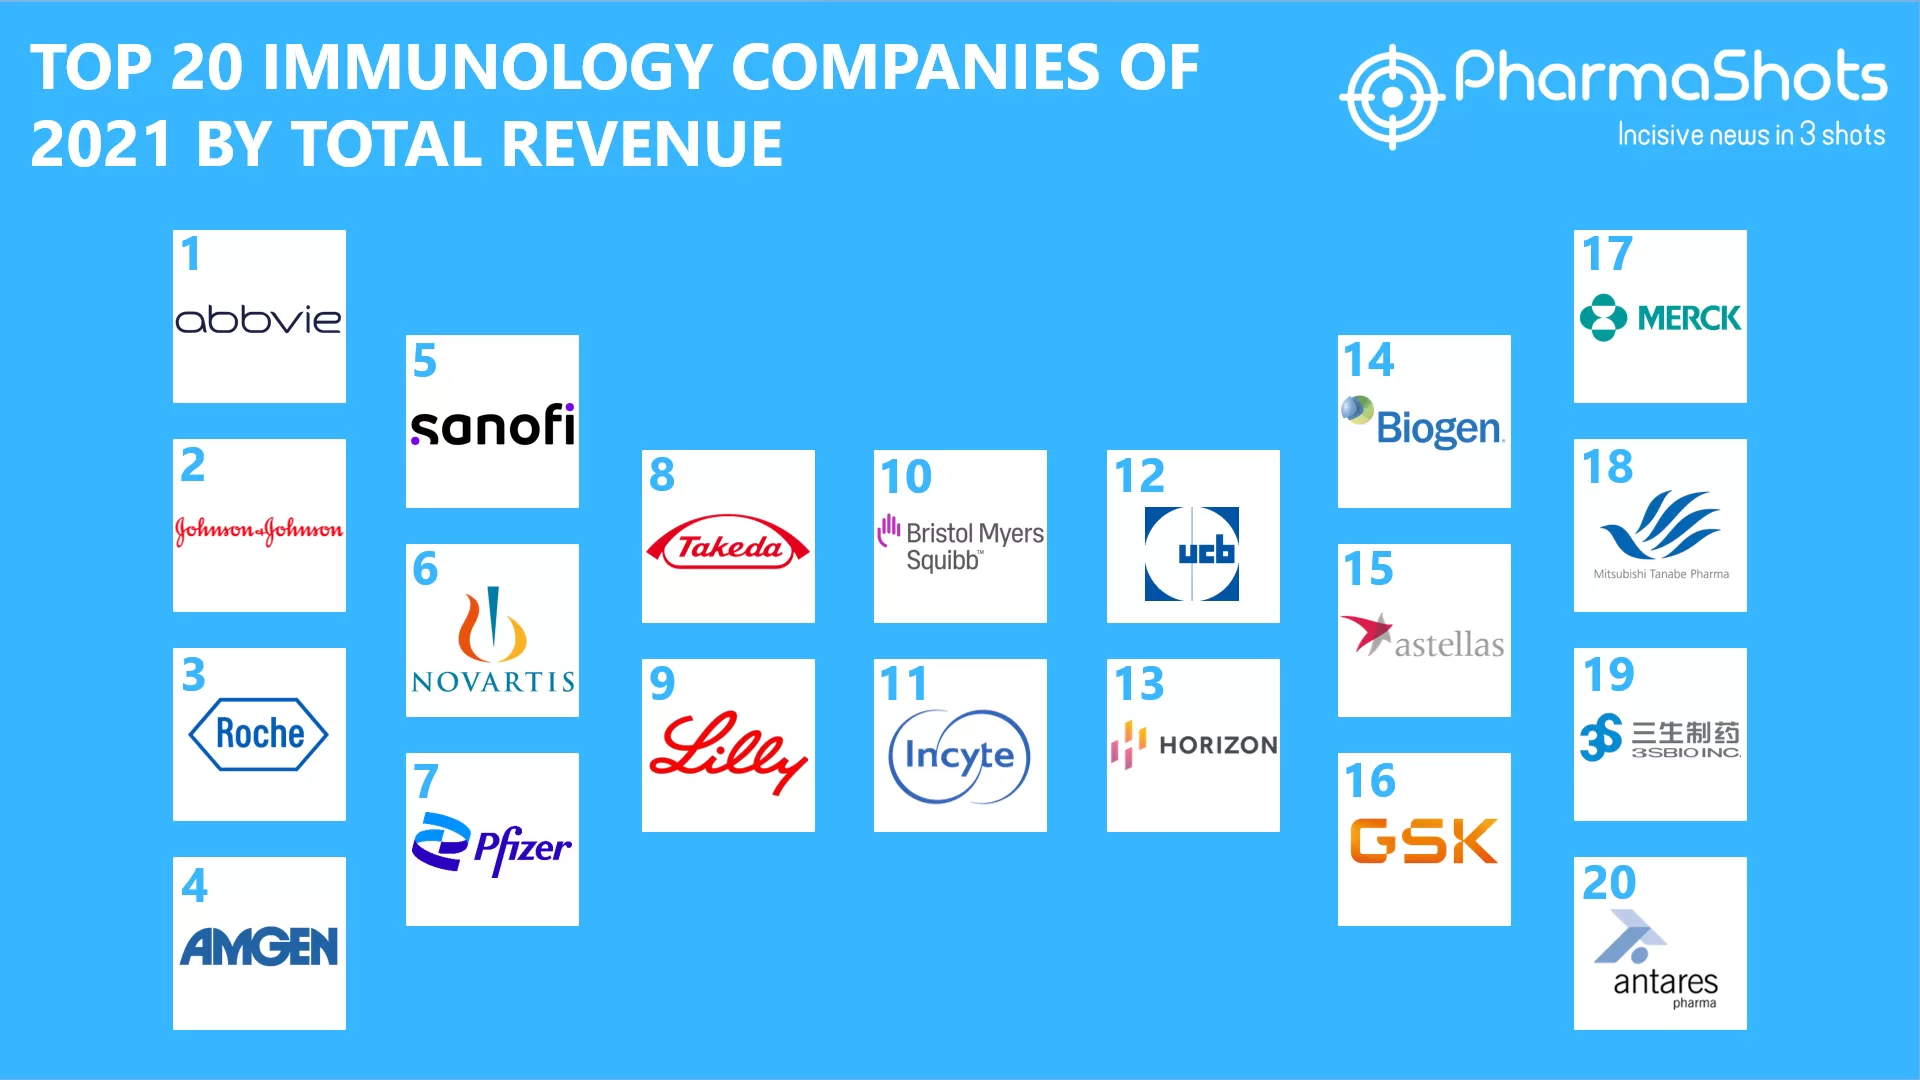 Top 20 Immunology Companies Based on 2021 Immunology Segment Revenue